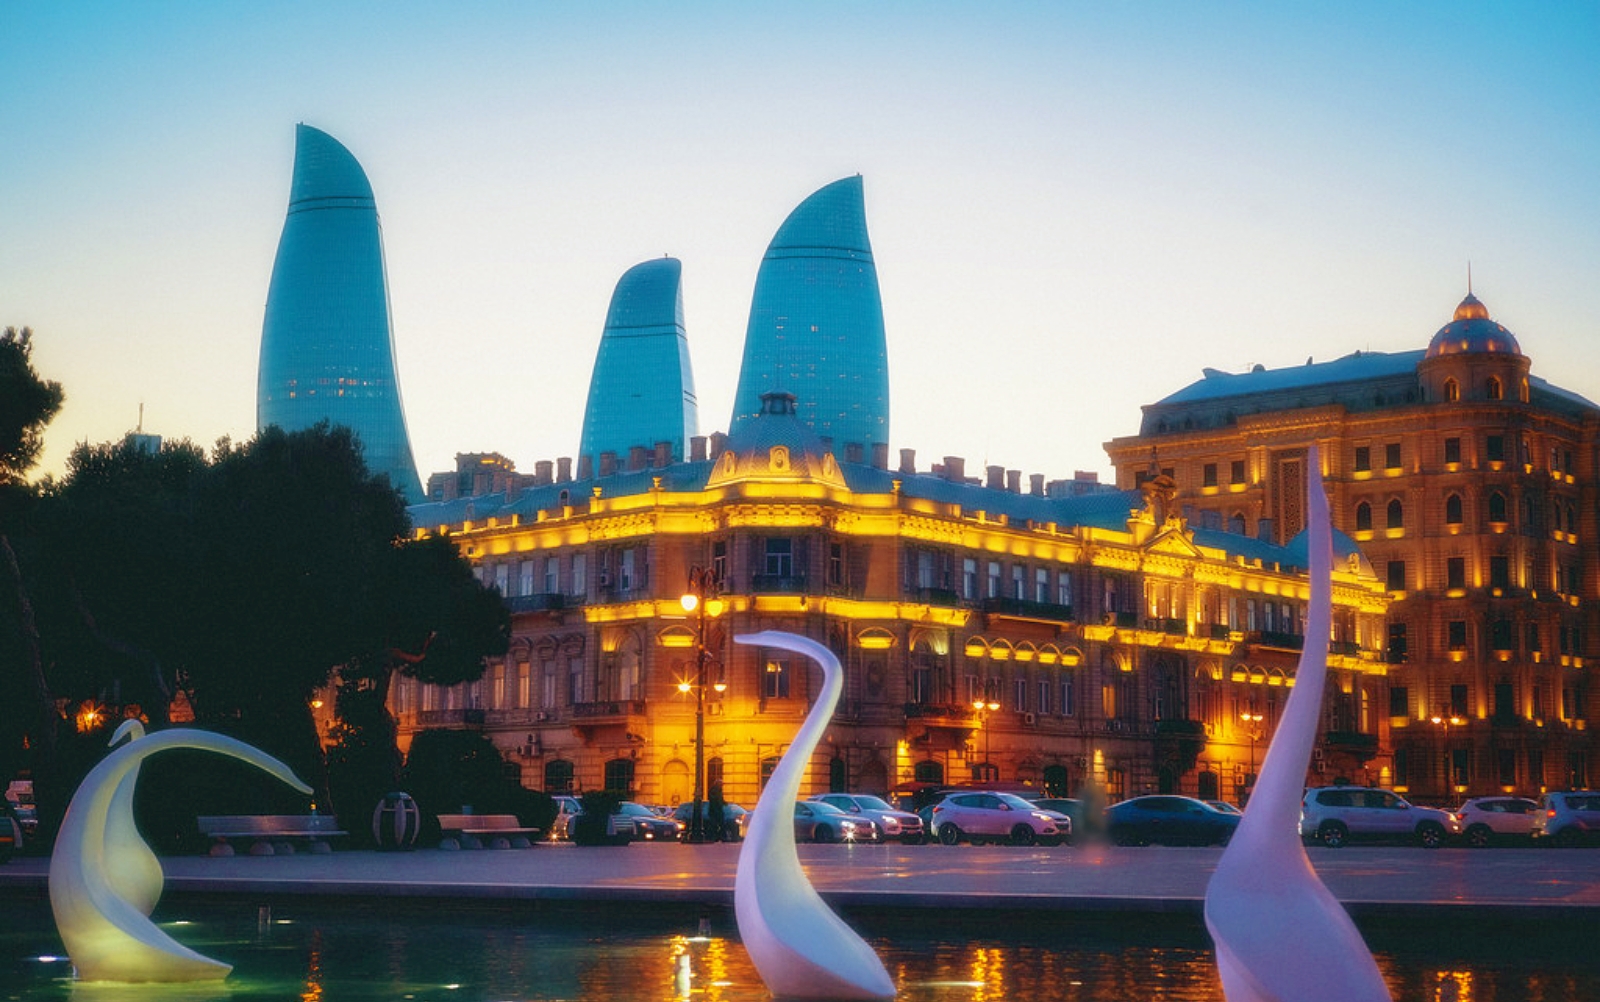 Baku Flame Towers embody Azerbaijan’s Land of Fire spirit